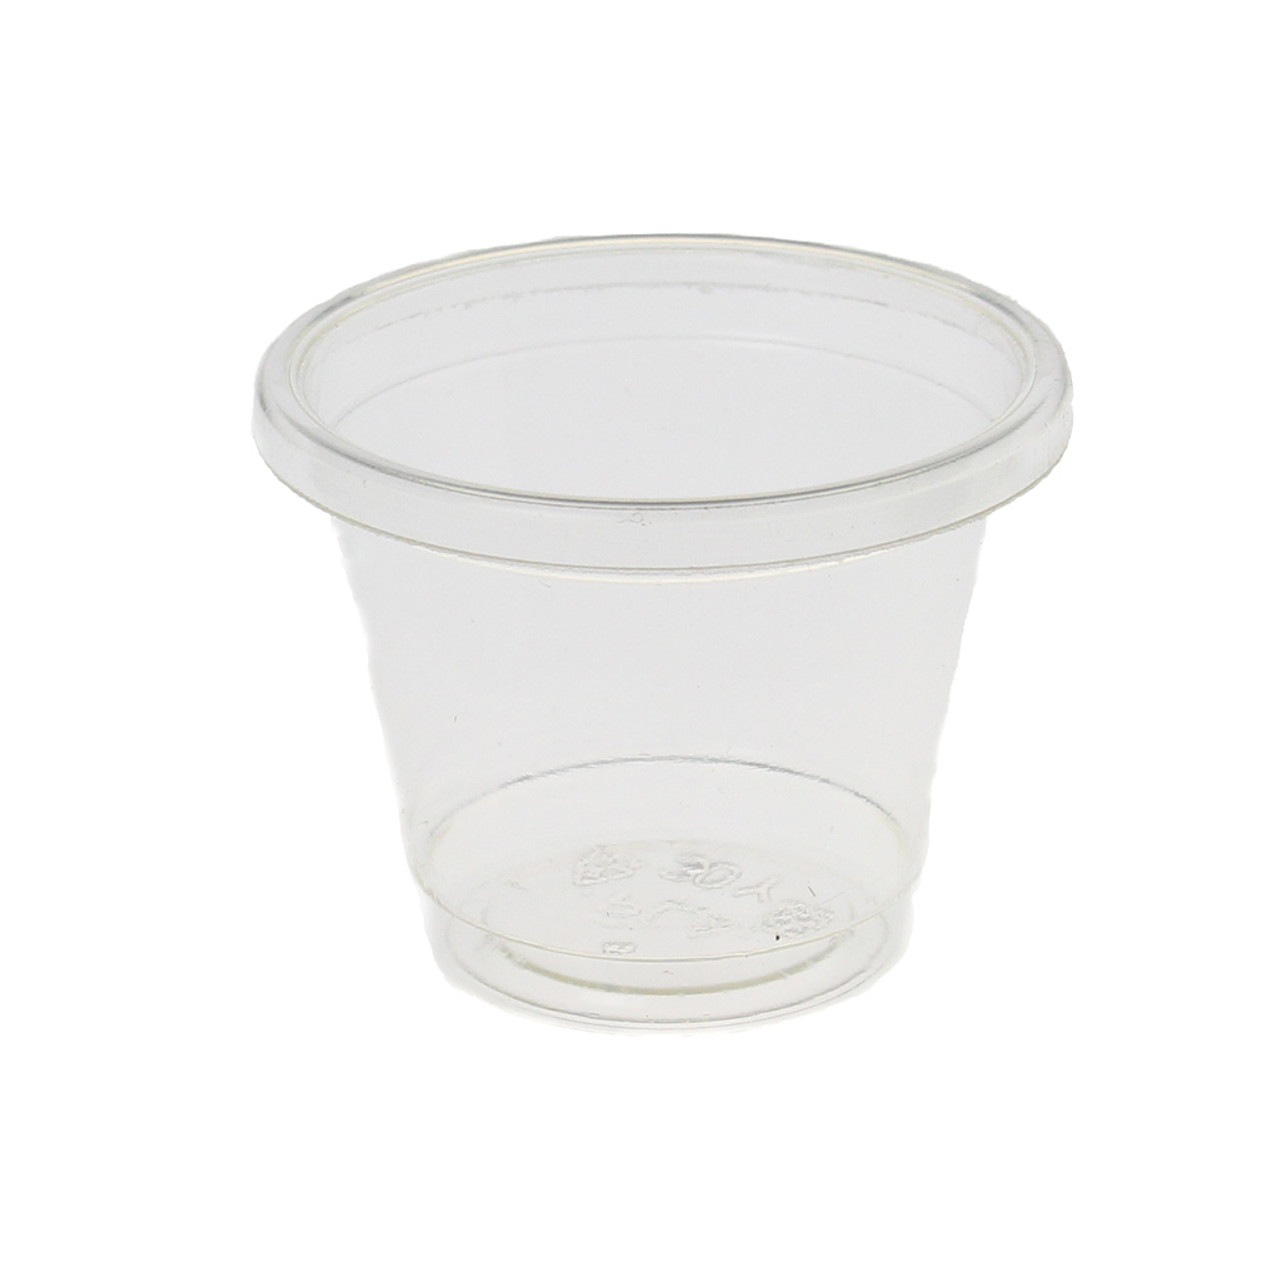 1 oz compostable sample cup